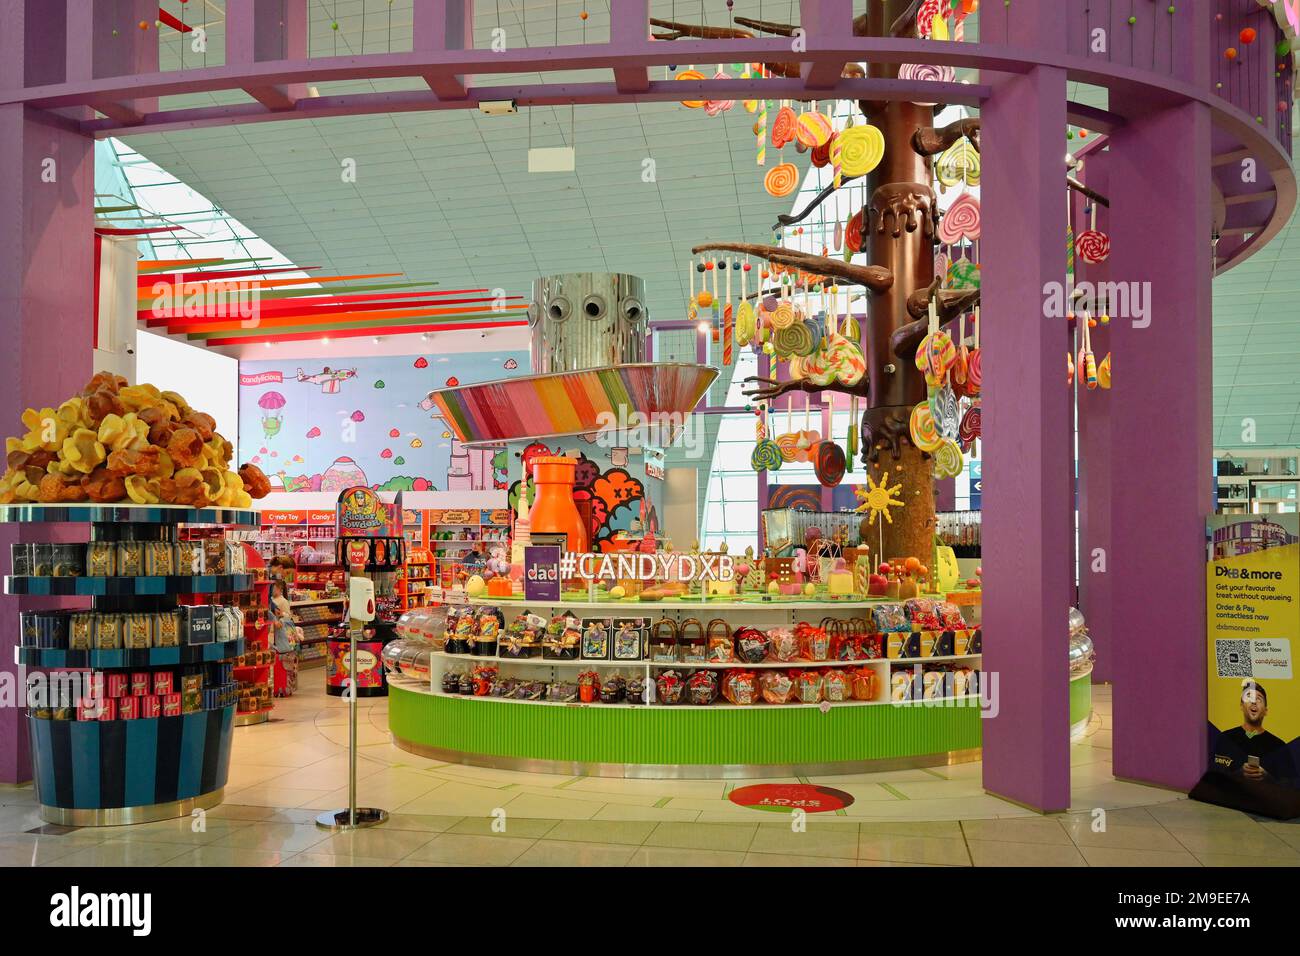 Candy Shop, Confectionery, Dubai, UAE Stock Photo